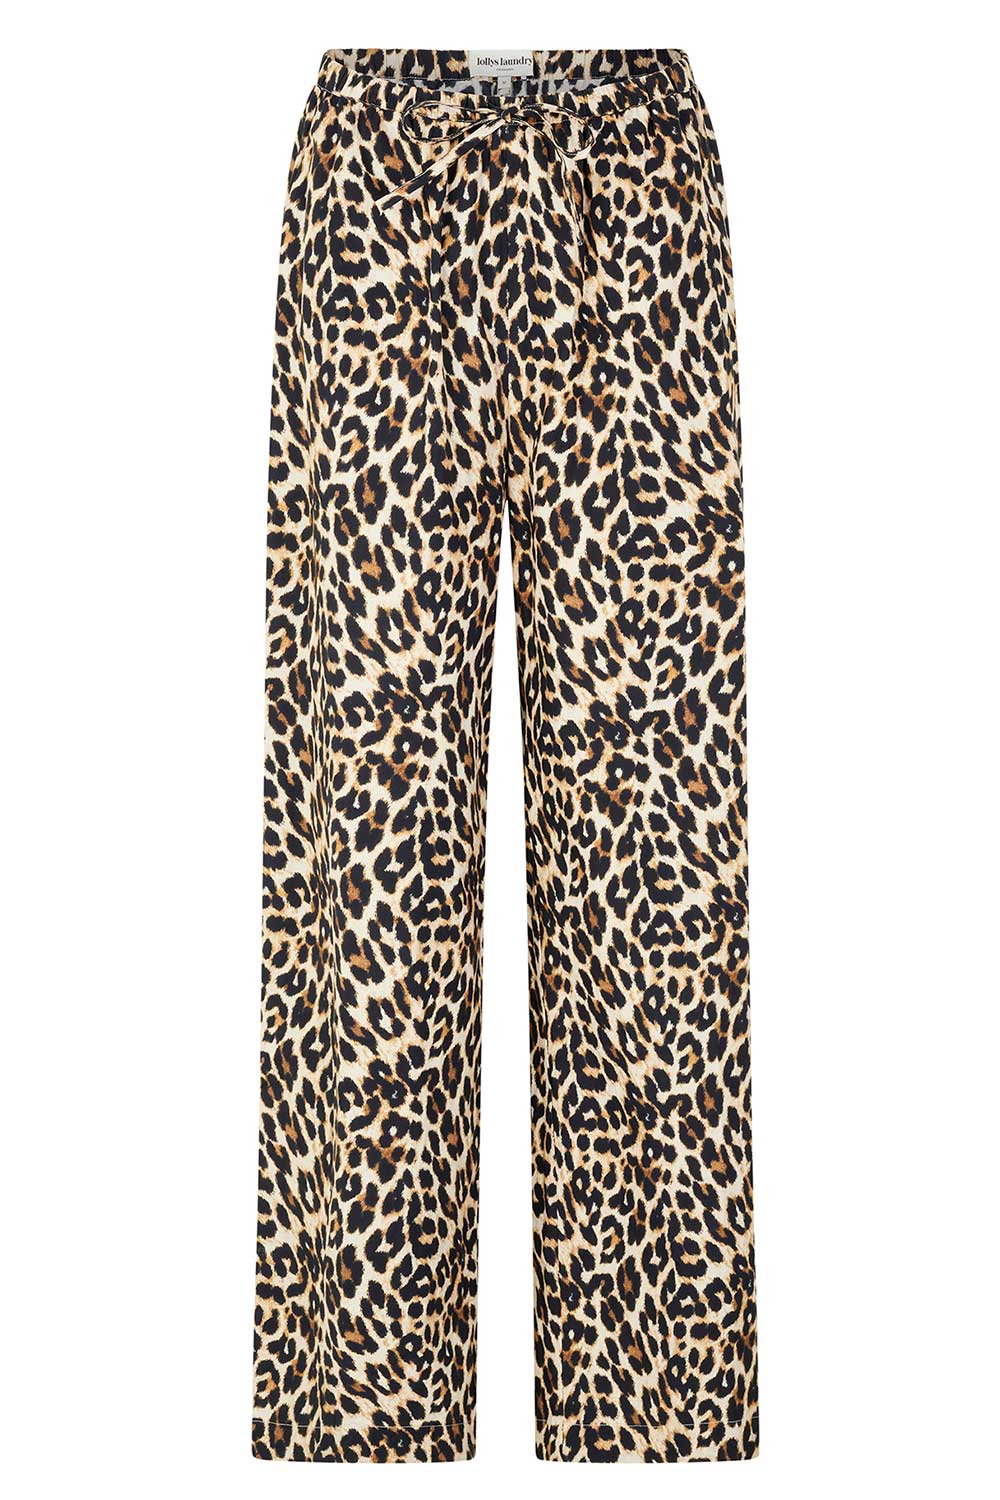 Lollys Laundry Leopard broek Rita dierenprint